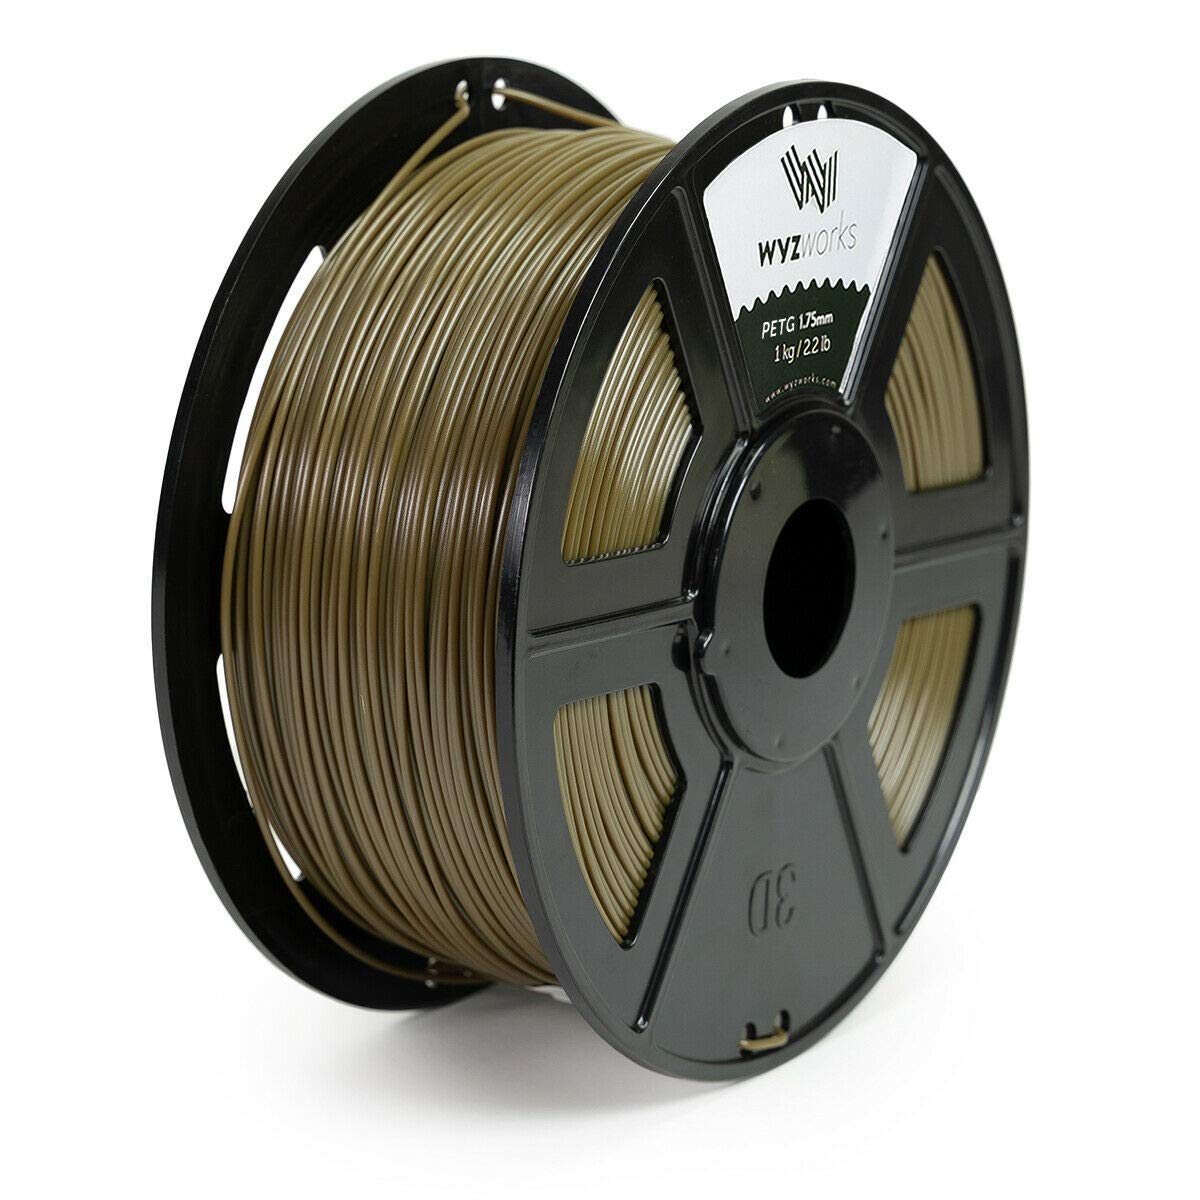 WYZworks PETG 1.75mm (Olive) Premium 3D Printer Filament - Dimensional Accuracy +/- 0.05mm 1kg/2.2lb + [ Multiple Color Options Available ]